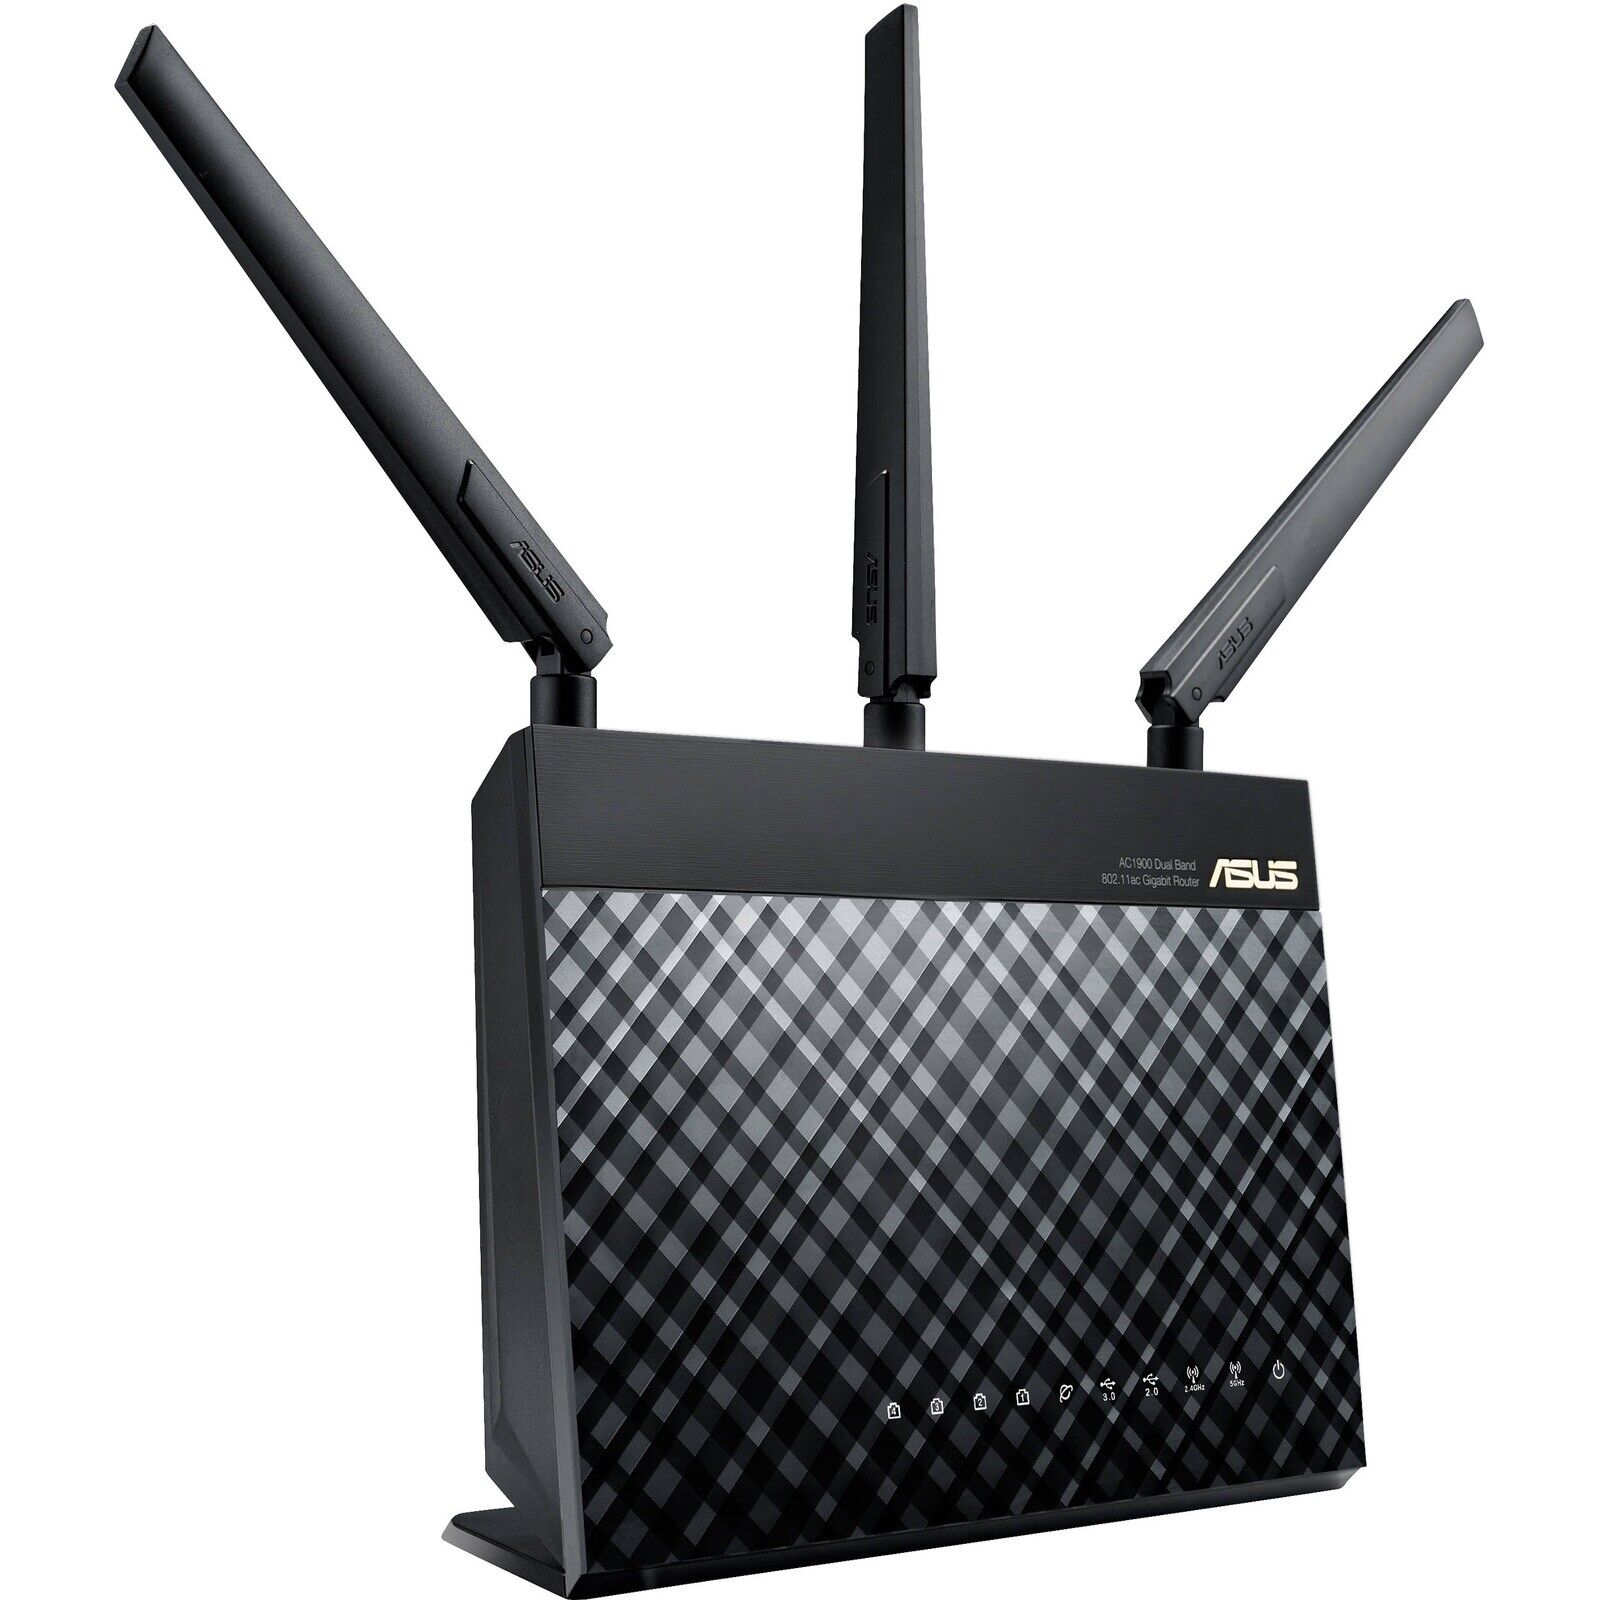 ASUS RT-AC68U 4 Port Dual Band Wireless Gigabit Router RTAC1900P AC1900